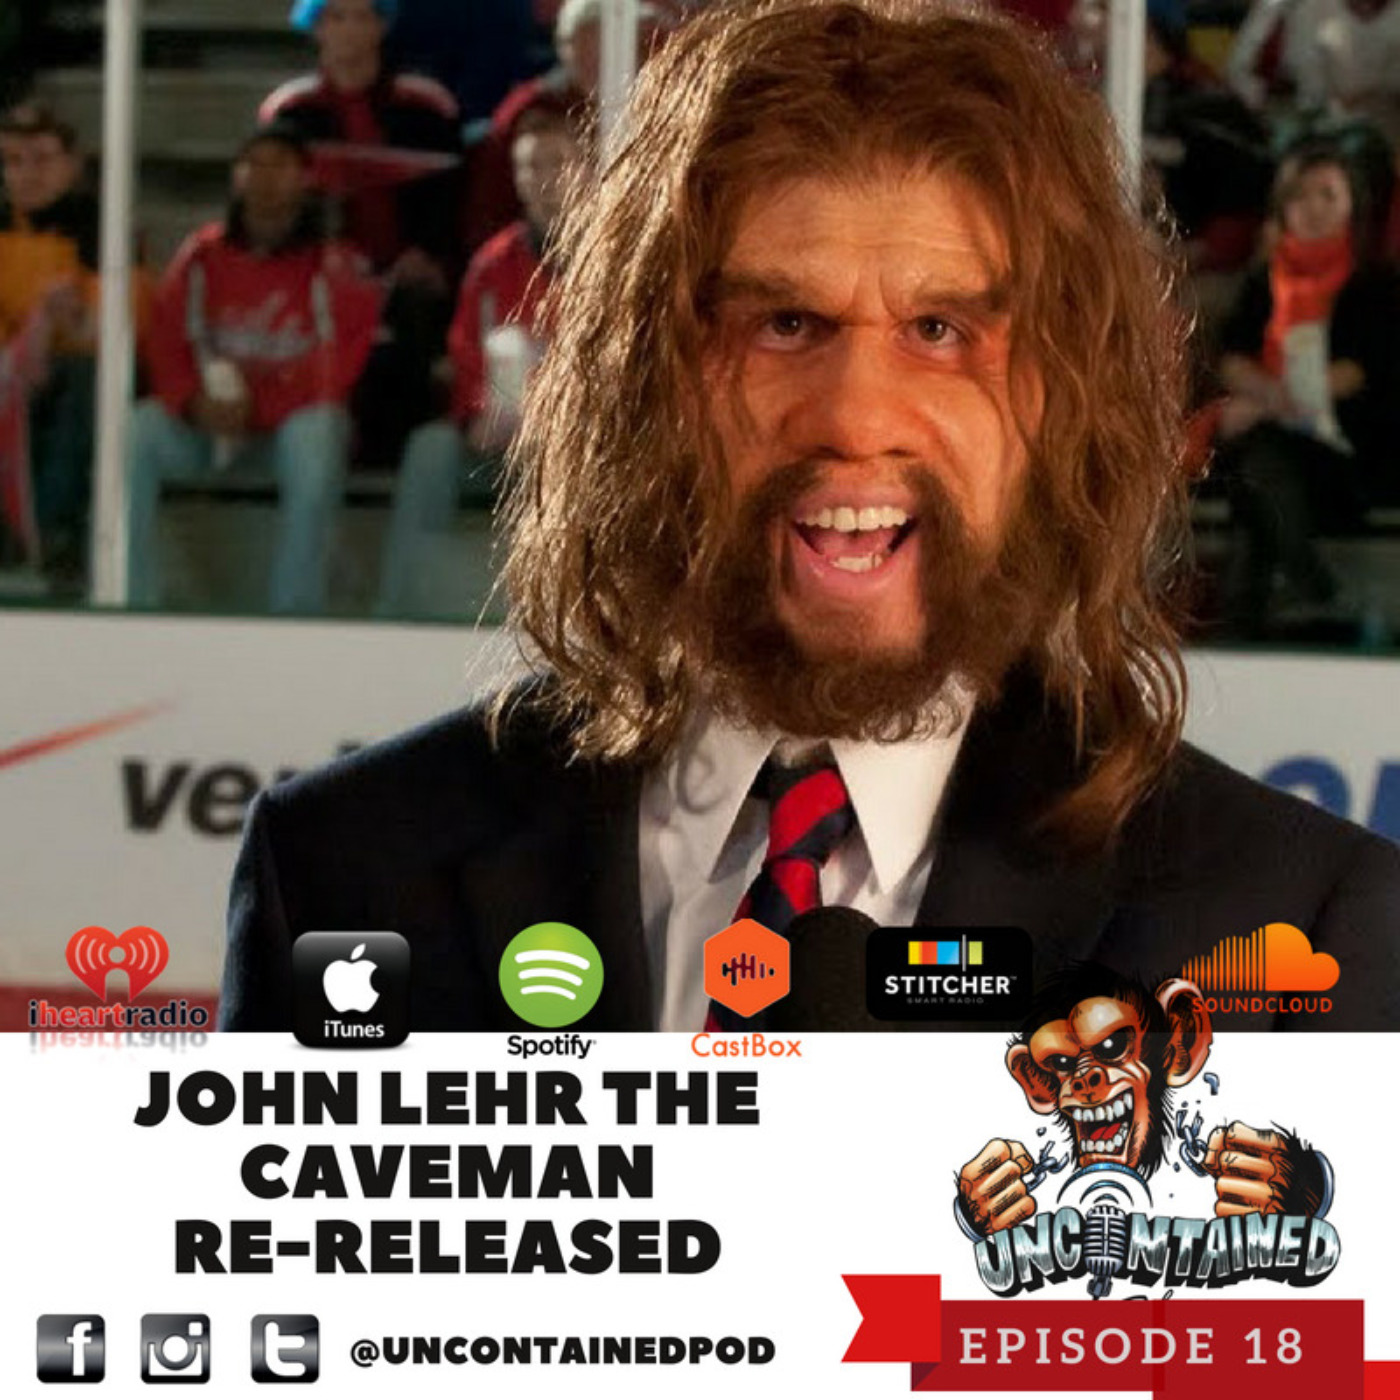 Re-release Episode 18: John Lehr - Caveman Re-released